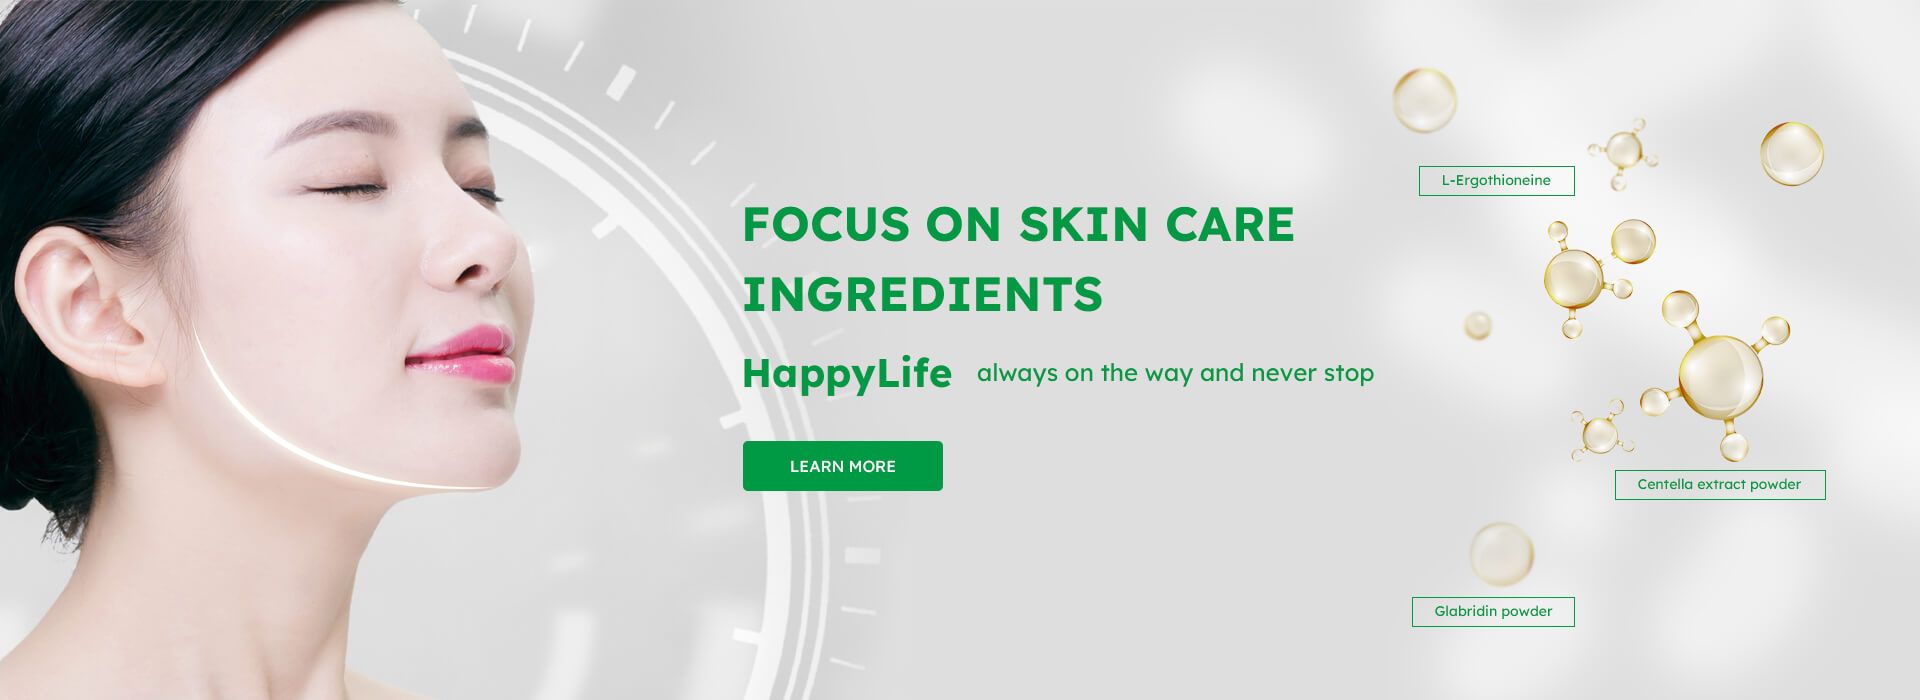 focus on skin care ingredients -HappyLife